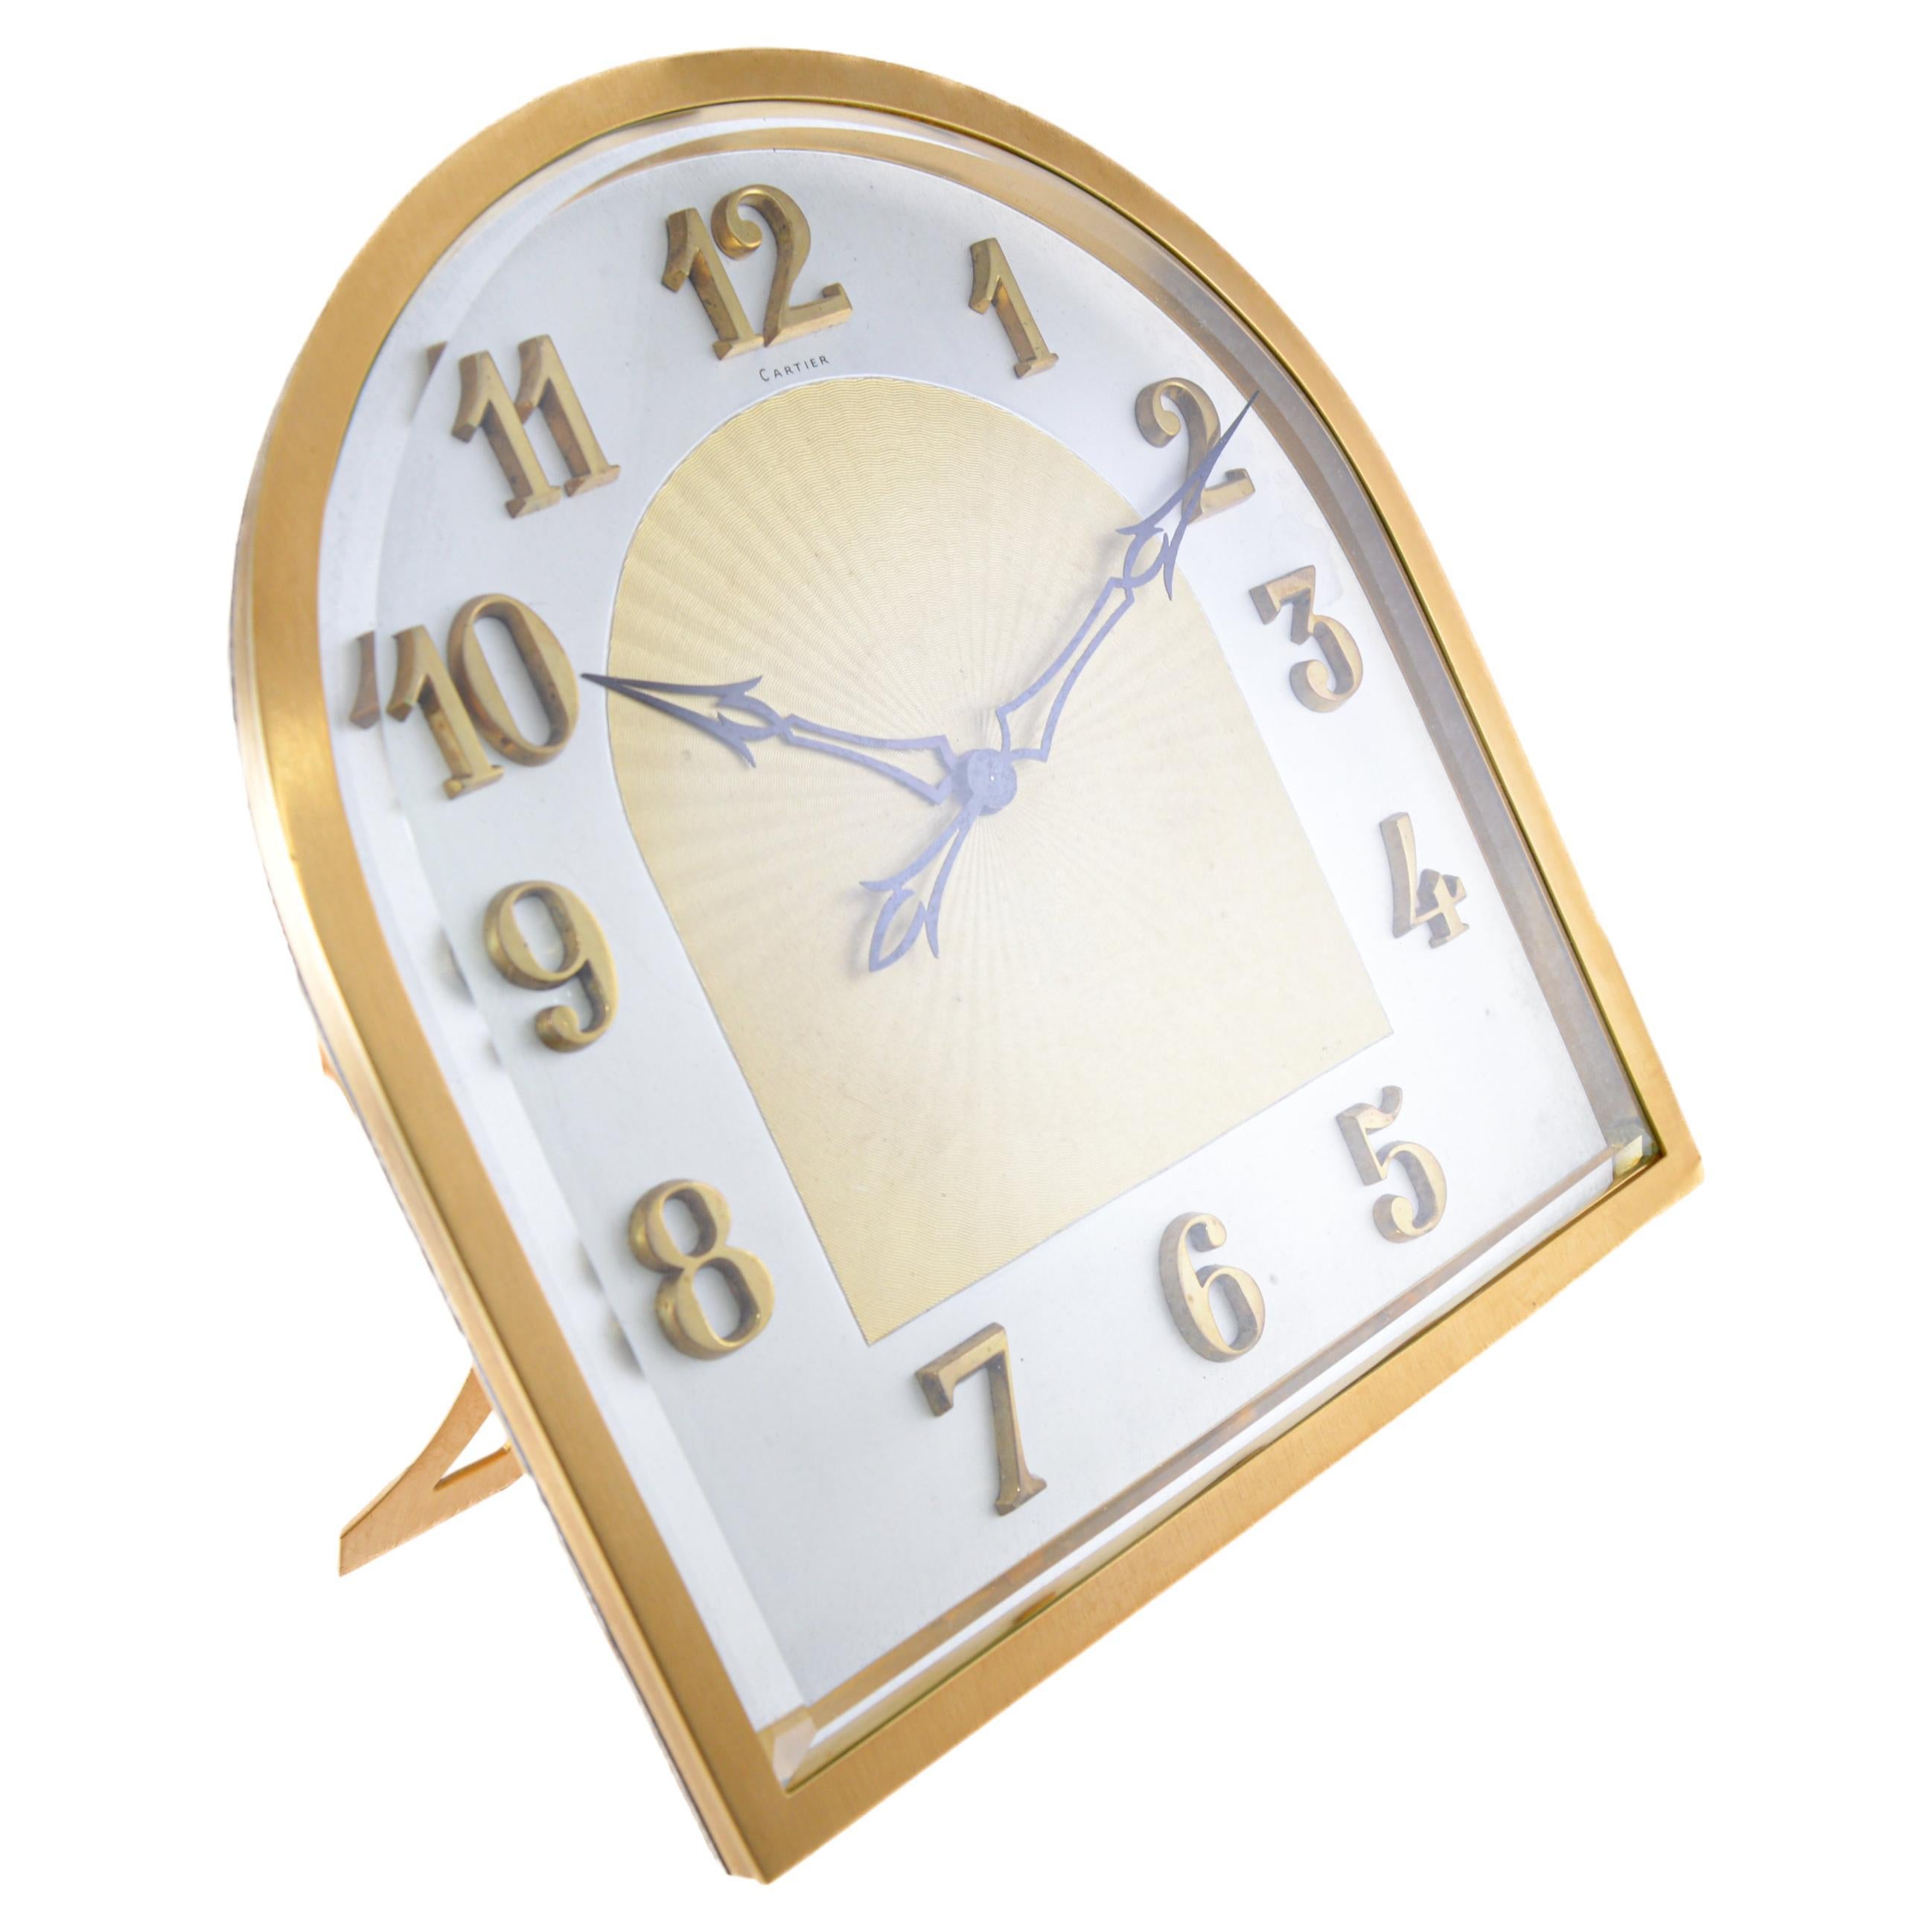 Cartier European Watch & Clock Co. Gilded Art Deco Chiming Desk Clock 1930's For Sale 2